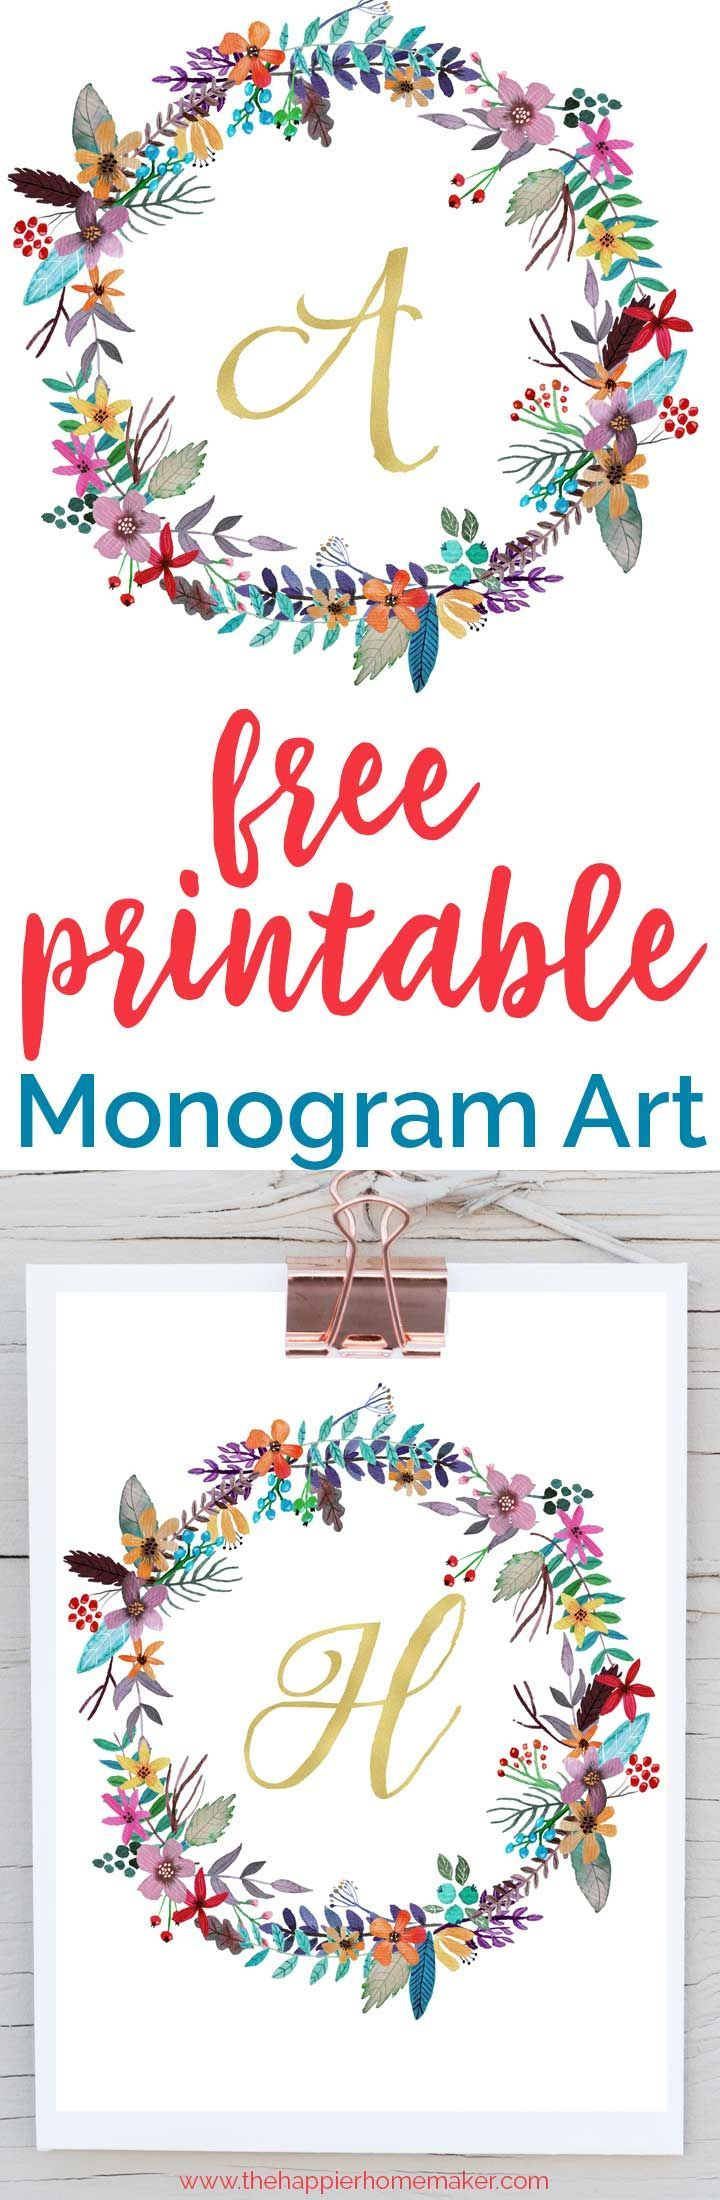 Free Printable Monogram Art | Free Printables | Pinterest | Free - Free Printable Monogram